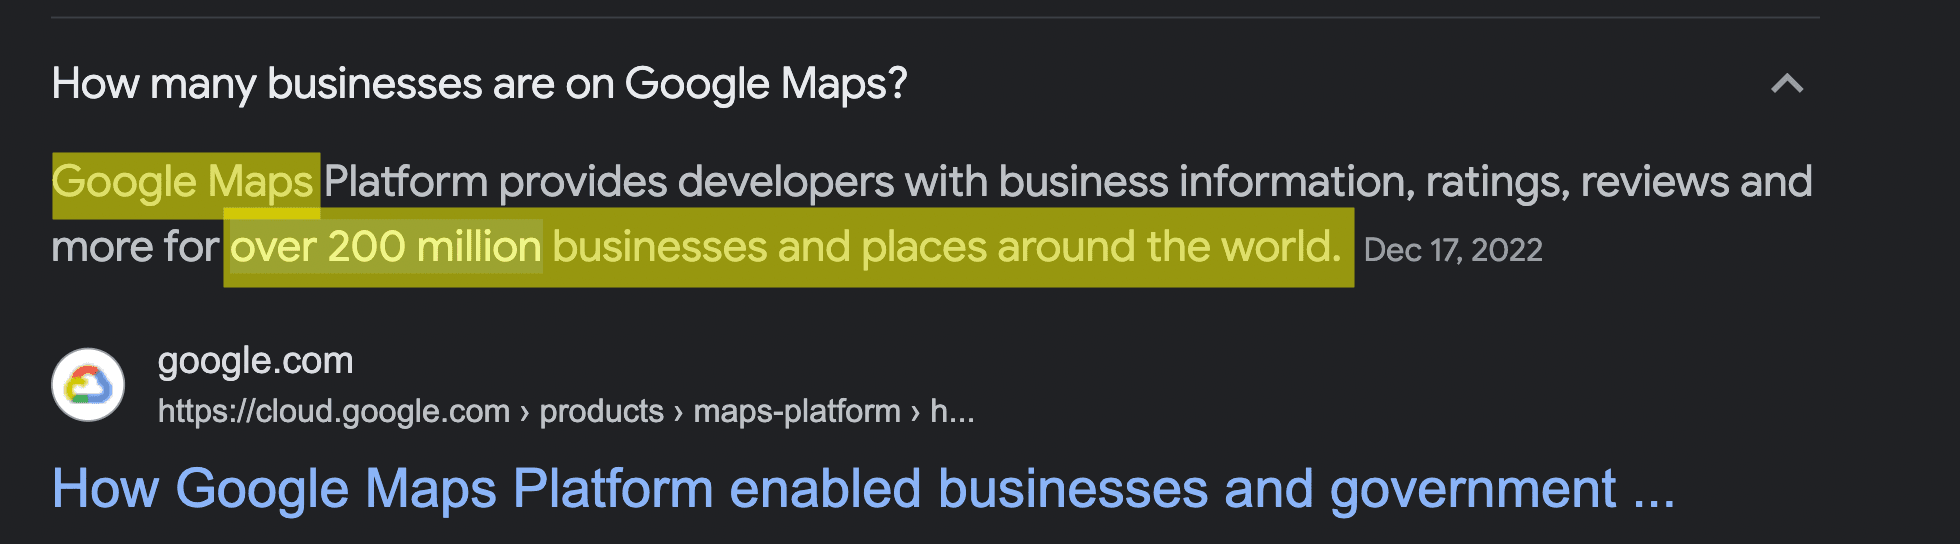 google maps hosts 200 million businesses online - image4.png